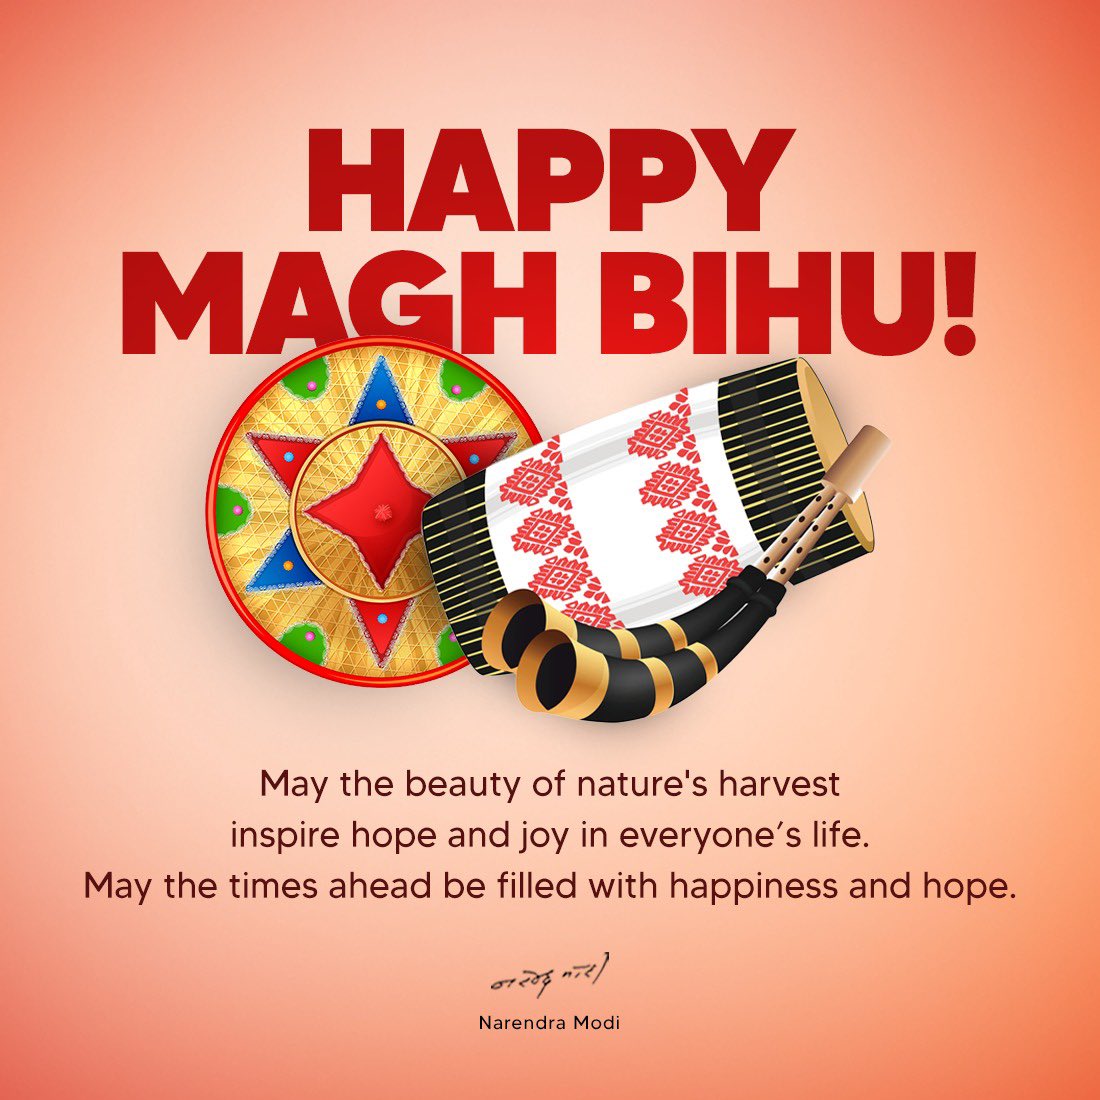 Greetings on Magh Bihu.